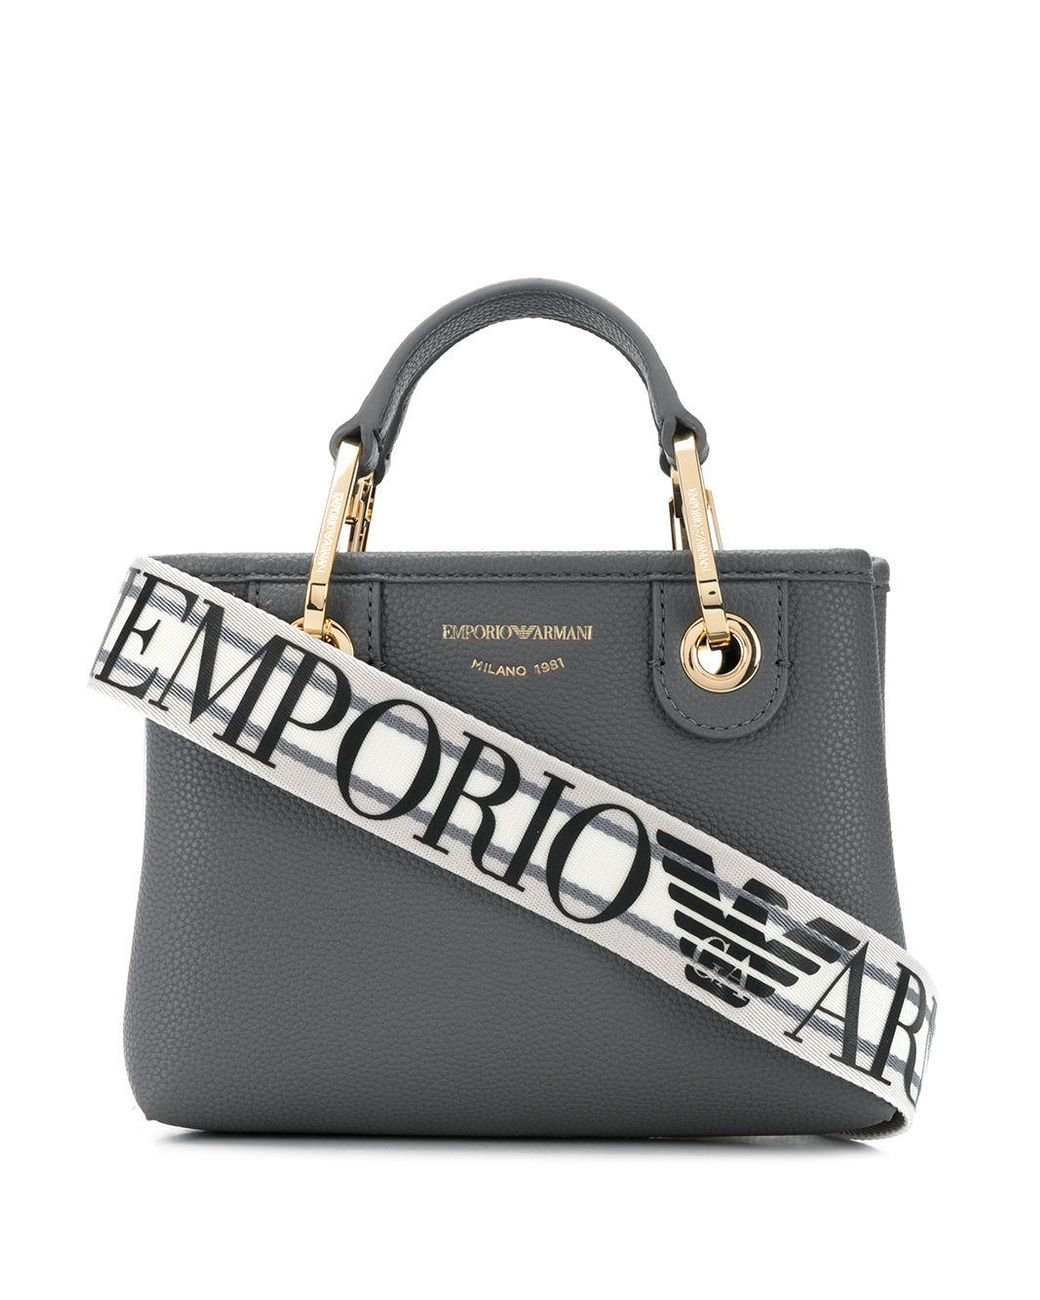 Glamadise - Italian fashion paradise - Real leather handbag Emporio Armani  - Black - Emporio Armani - Handbags - Leather bags - Glamadise - italian  fashion paradise